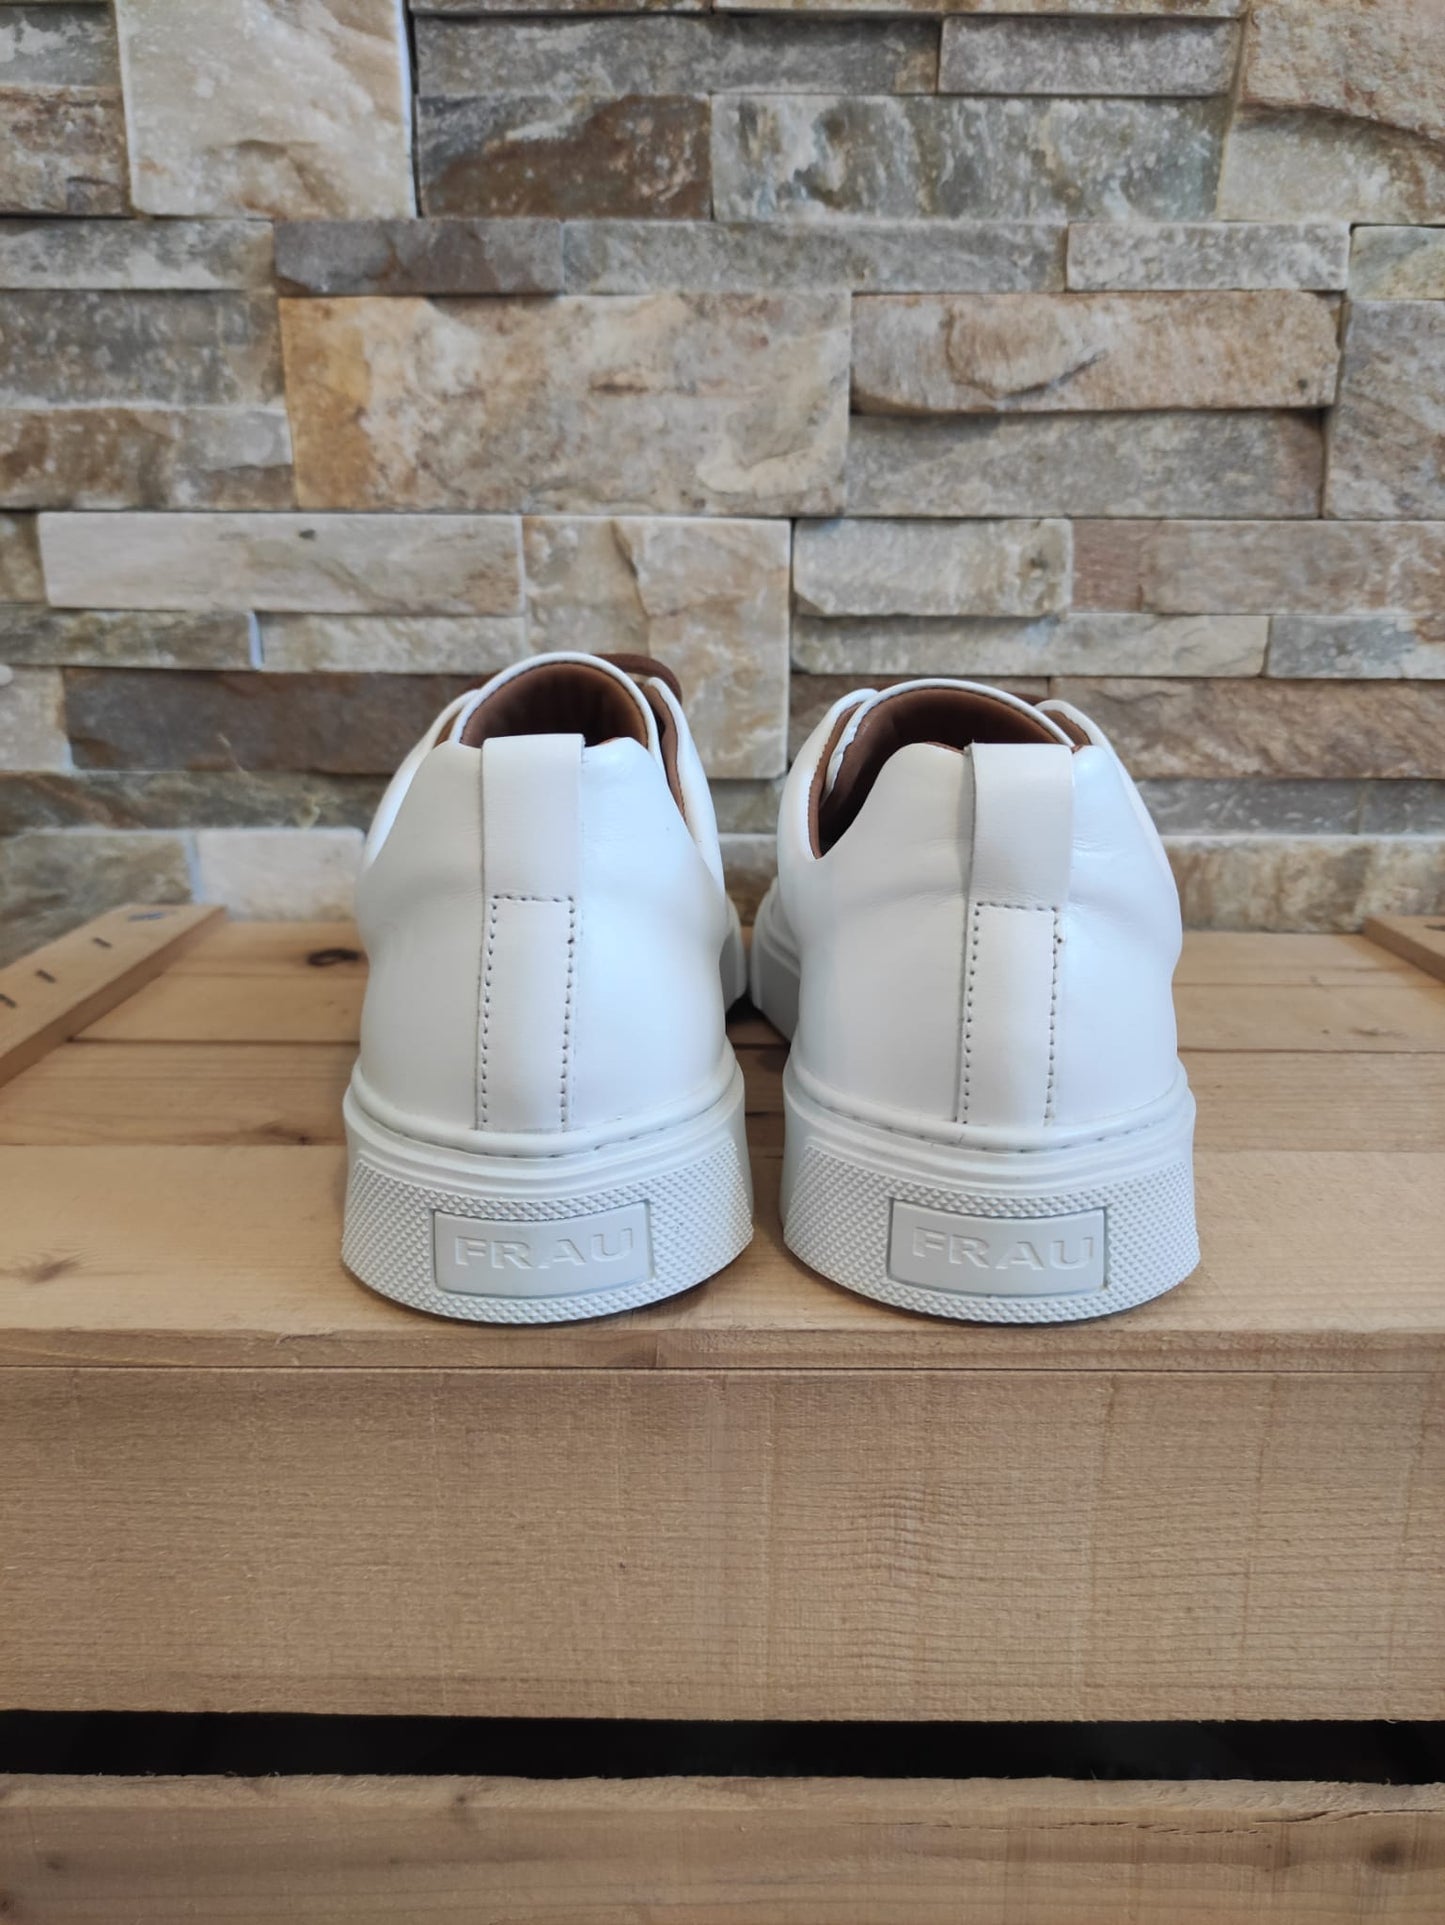 Sneakers uomo-FRAU - Calzature principe